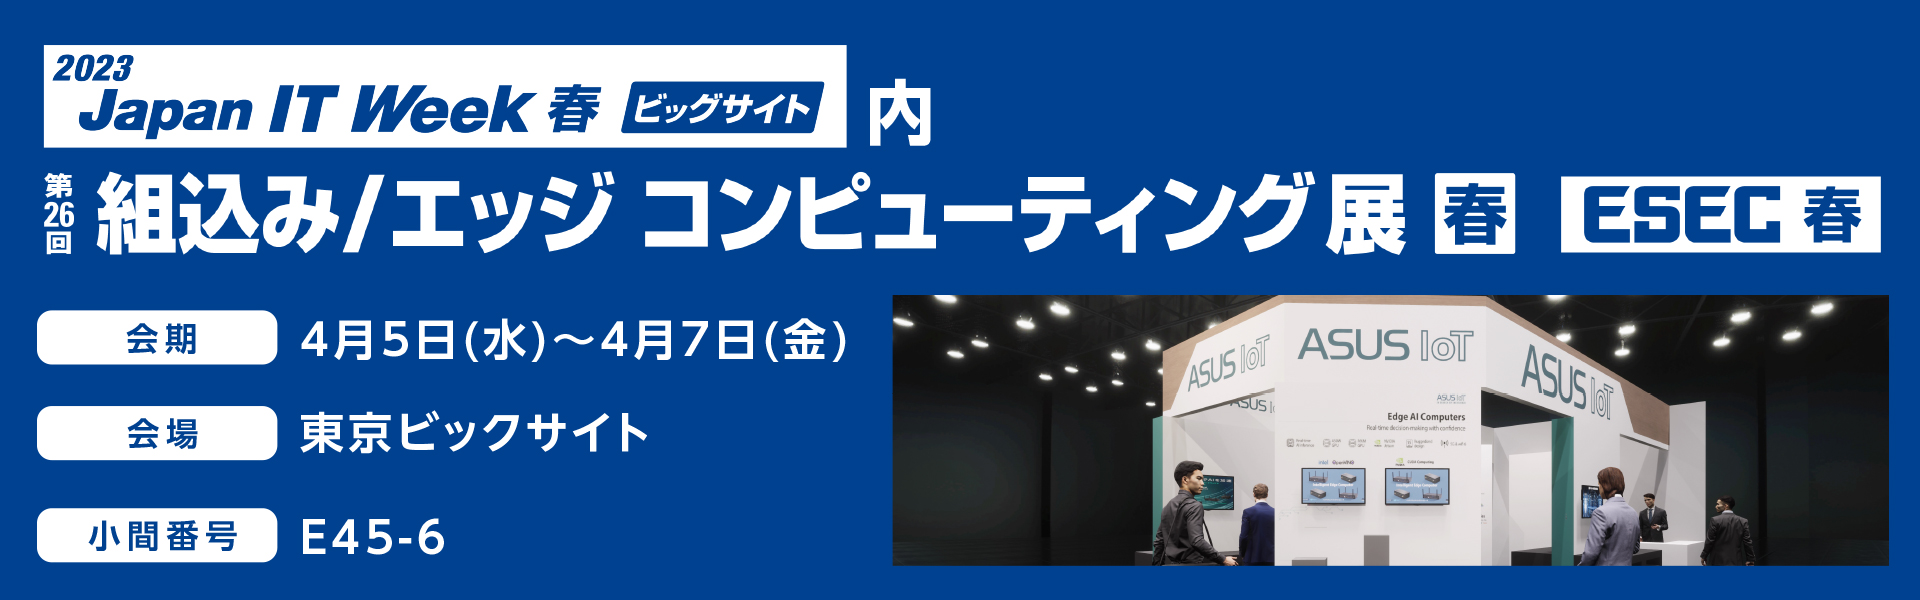 ASUS IoT、Japan IT Week第26回組込み/エッジ コンピューティング展に出展